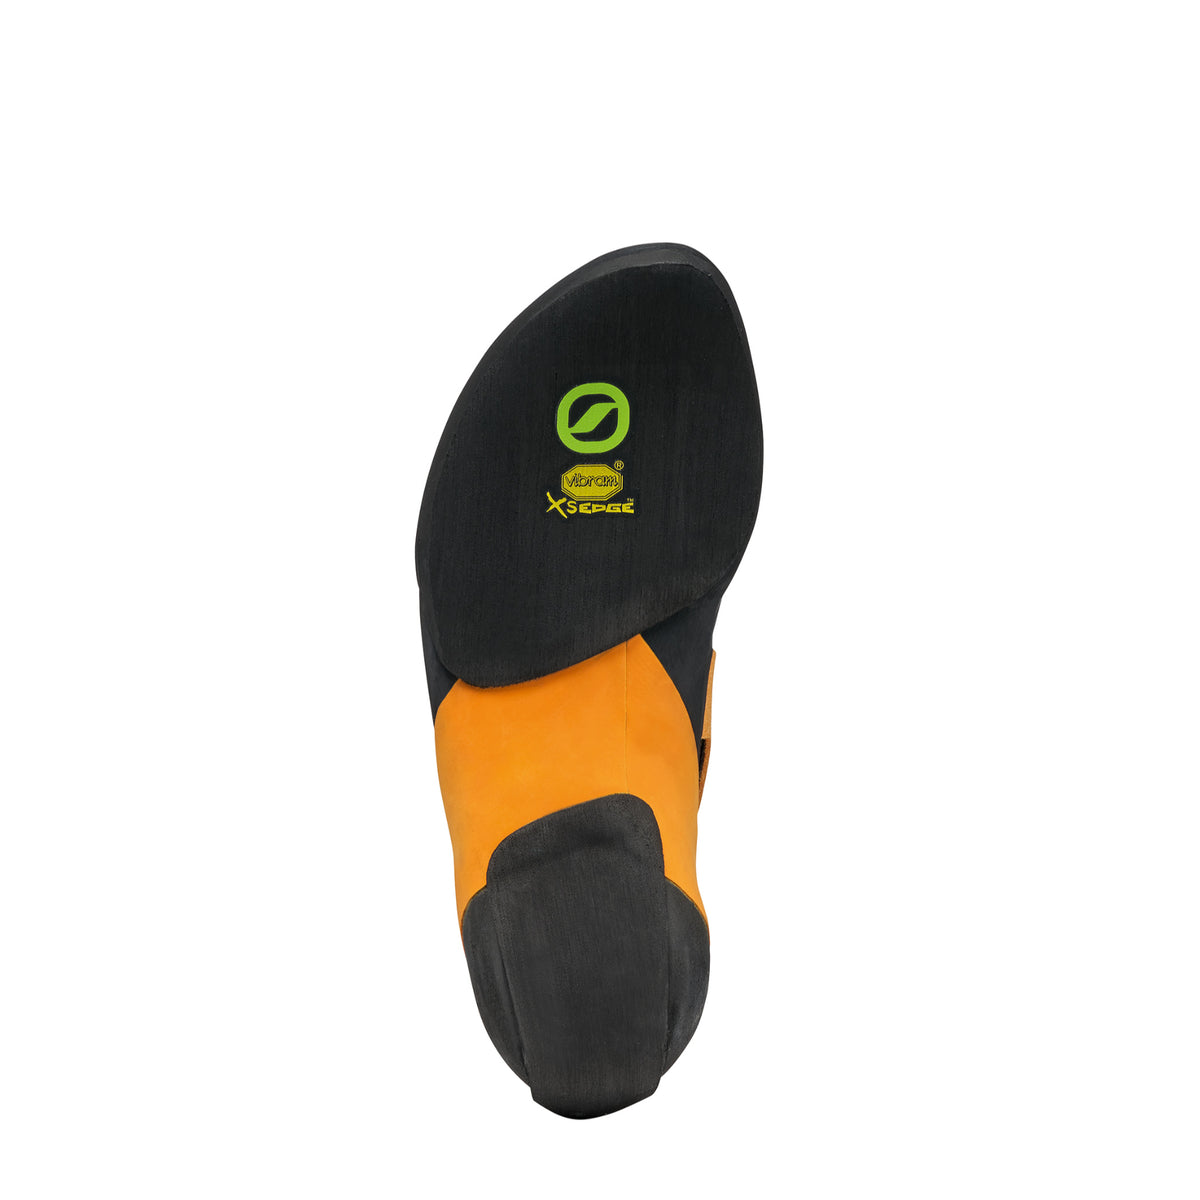 Scarpa Instinct VS climbing shoe in black/orange. view of the sole